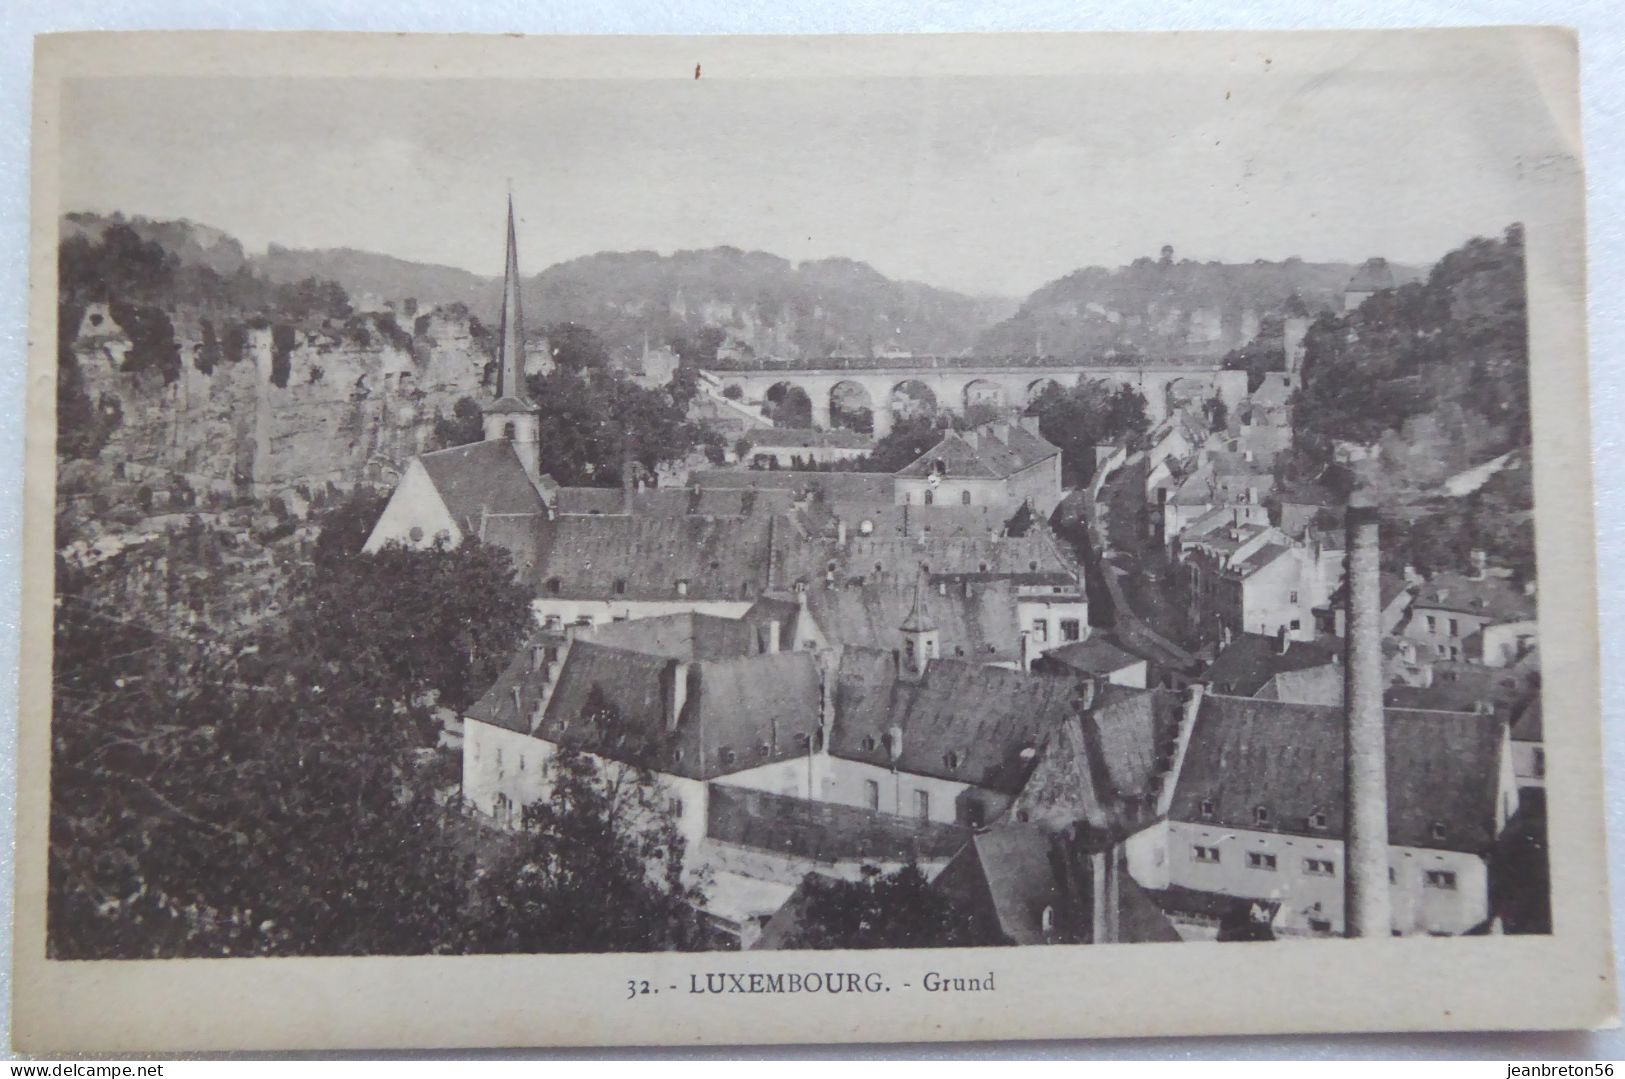 LUXEMBOURG. - Grund - CPA 1922 - Luxemburg - Town